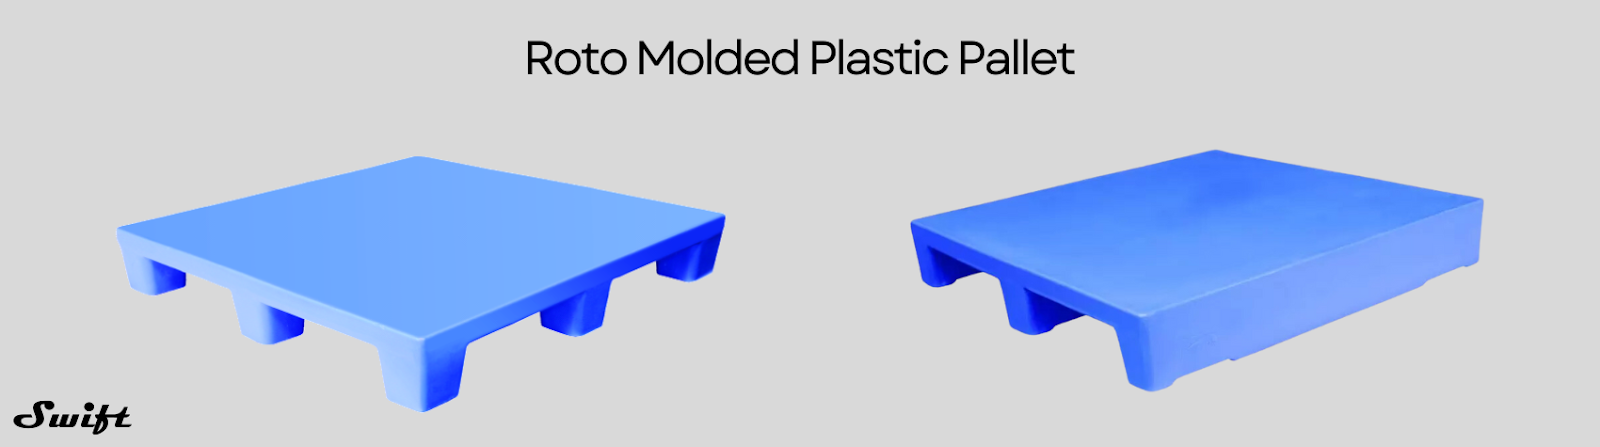 Roto Molded Plastic Pallet